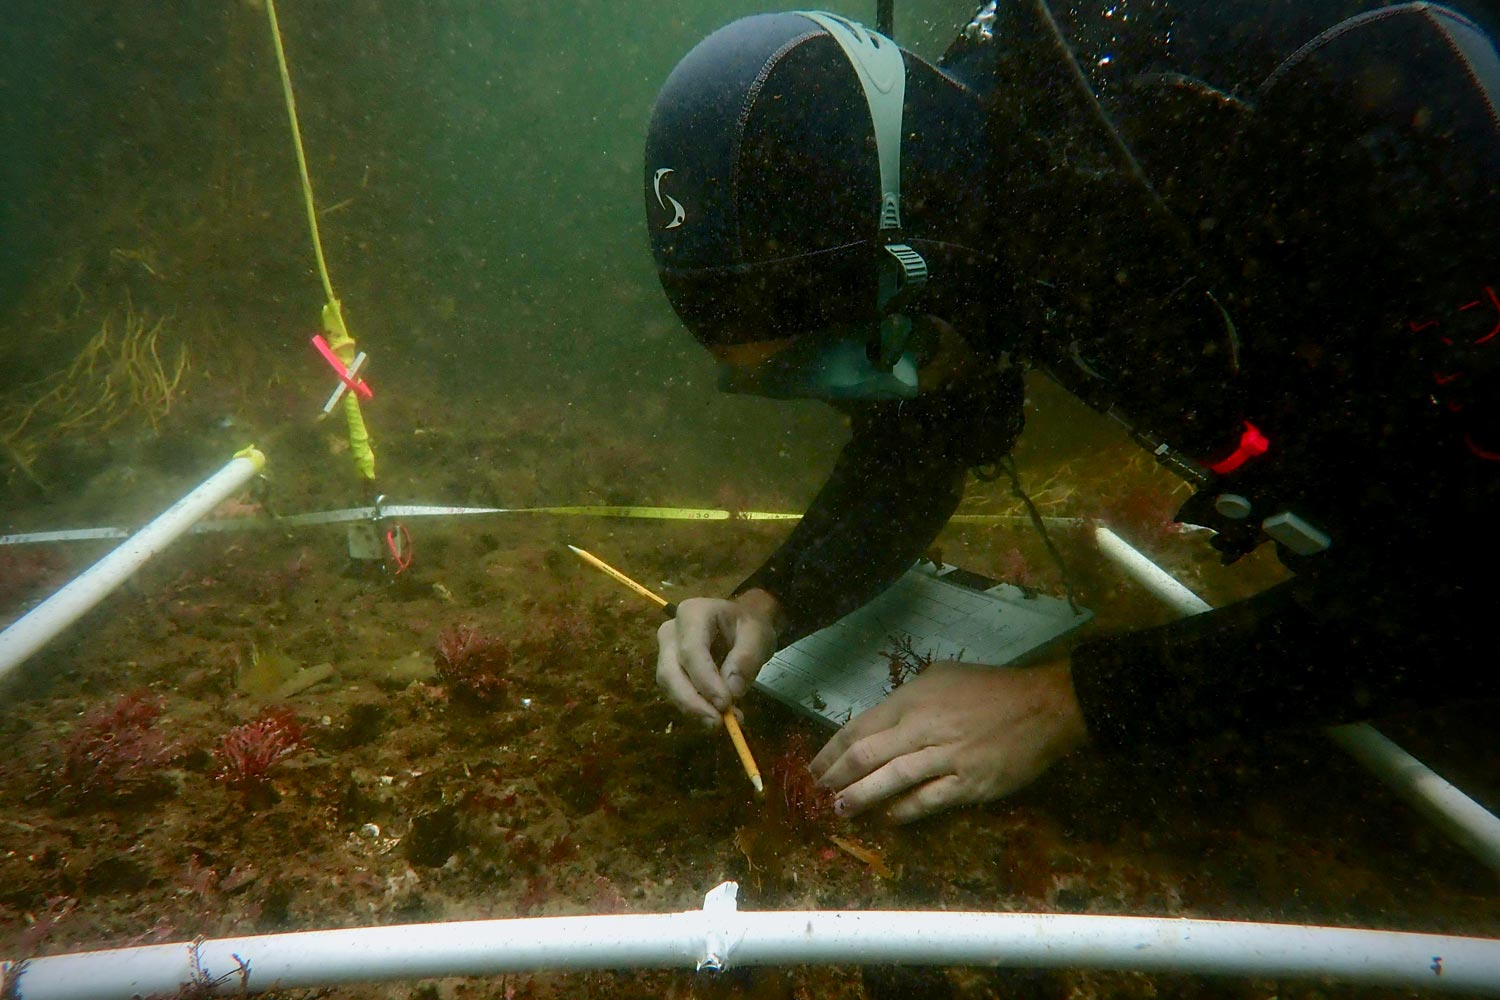 A diver identifies and measures seaweed on the ocean floor